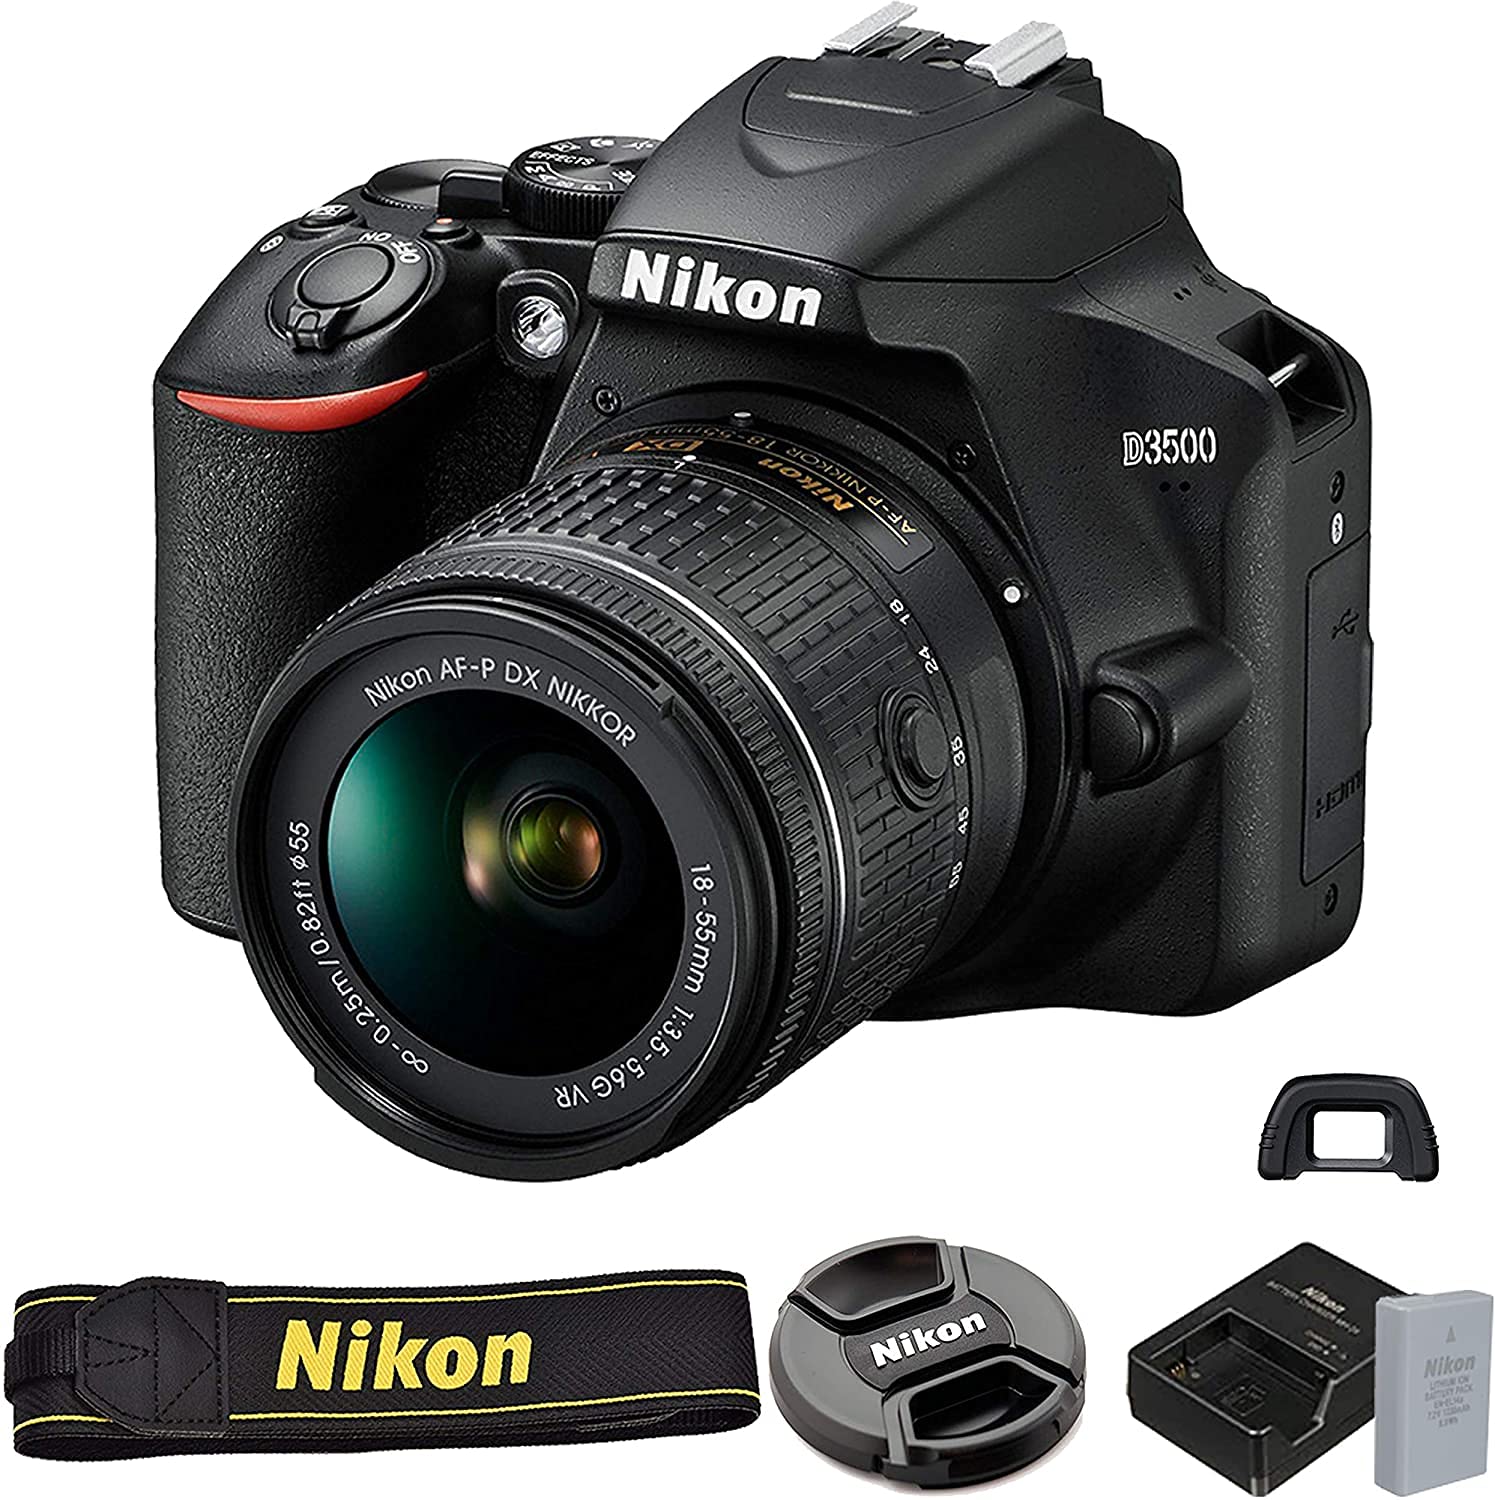 Nikon Intl D3500 24.2MP DSLR Digital Camera with 18-55mm VR Lens Bundle, Includes 64GB SD Memory Card, Large Camera Bag, Filter Kit, Telephoto Lens, Tripods and More (Large Kit)